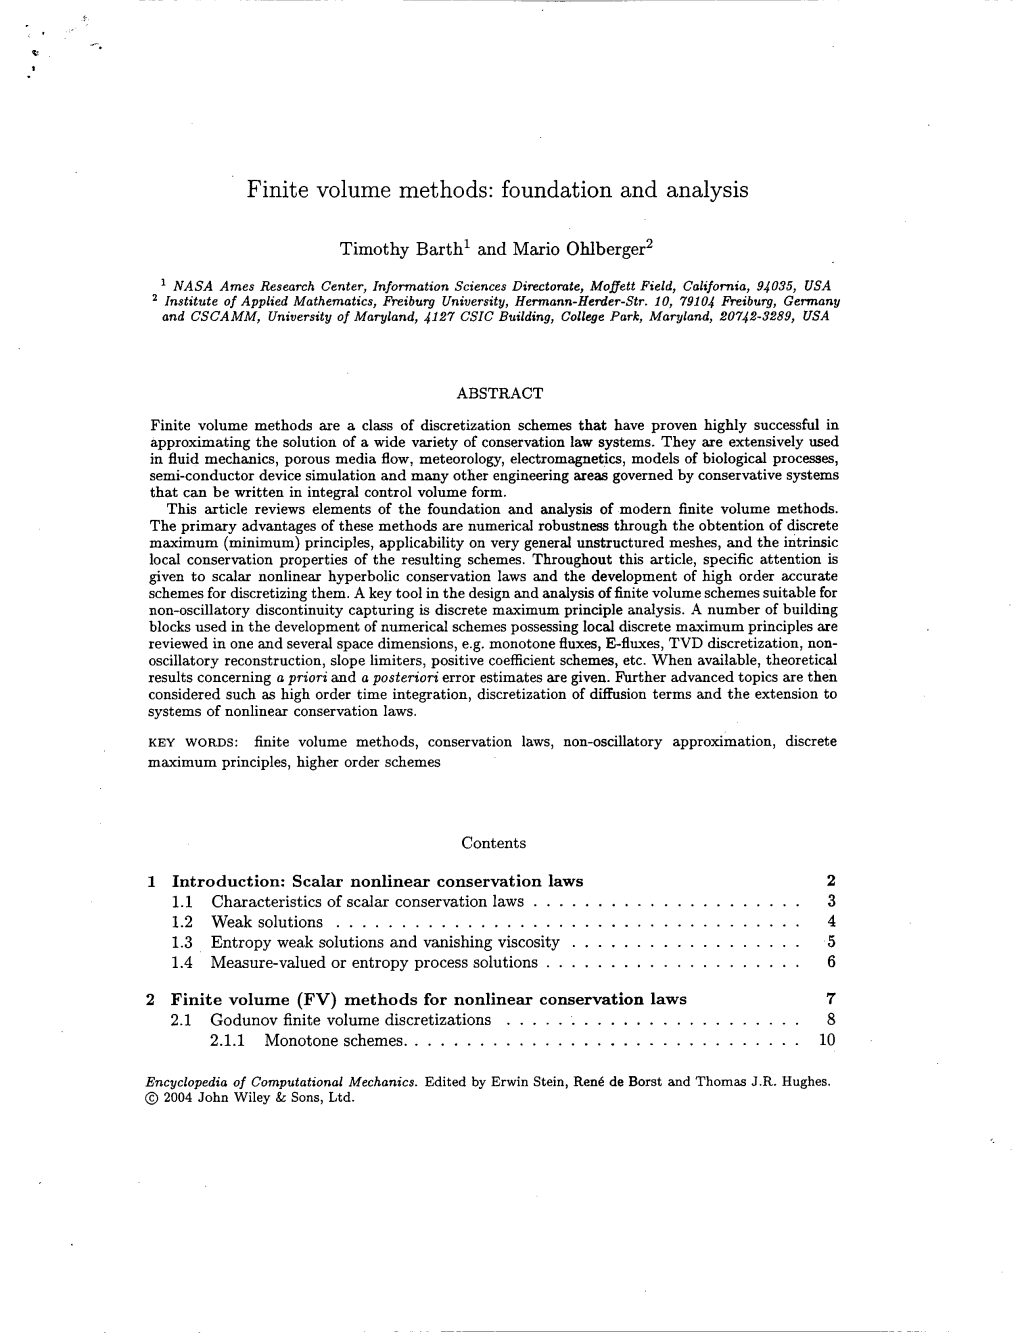 Finite Volume Met Hods: Foundation and Analysis